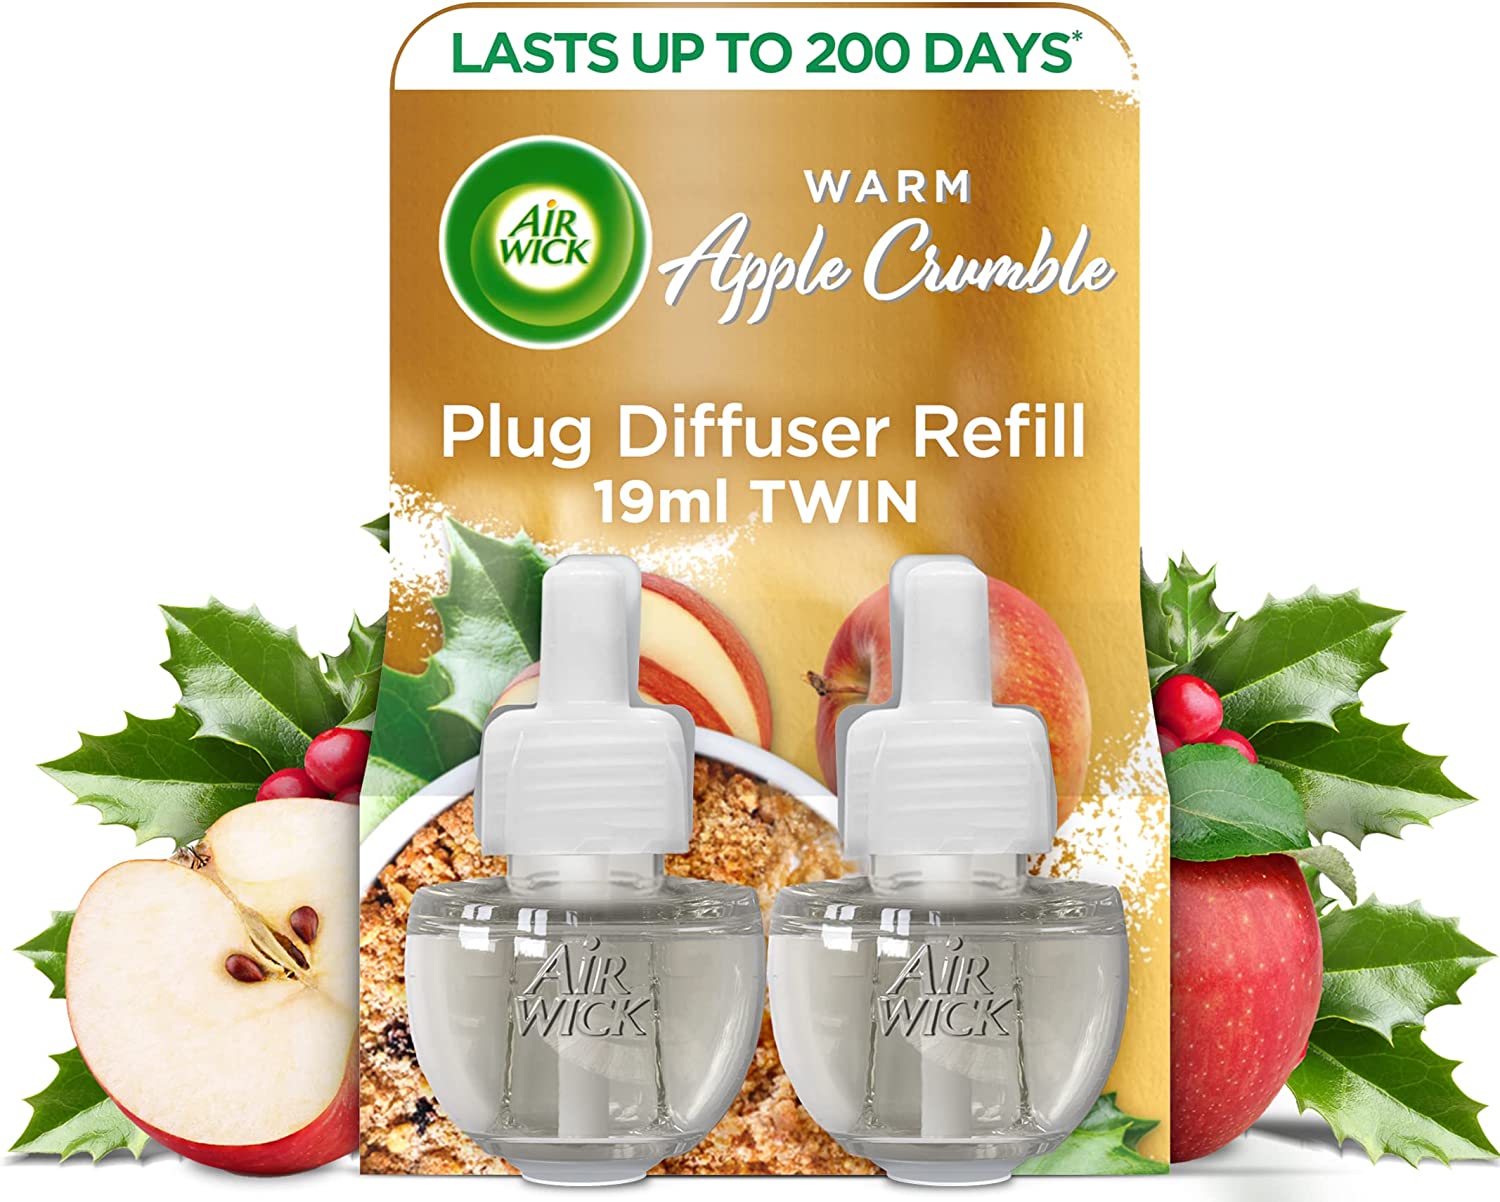 AirWick Plug In Diffuser Air Freshener Twin Refills Warm Apple Crumble RRP £7.25 CLEARANCE XL £5.99